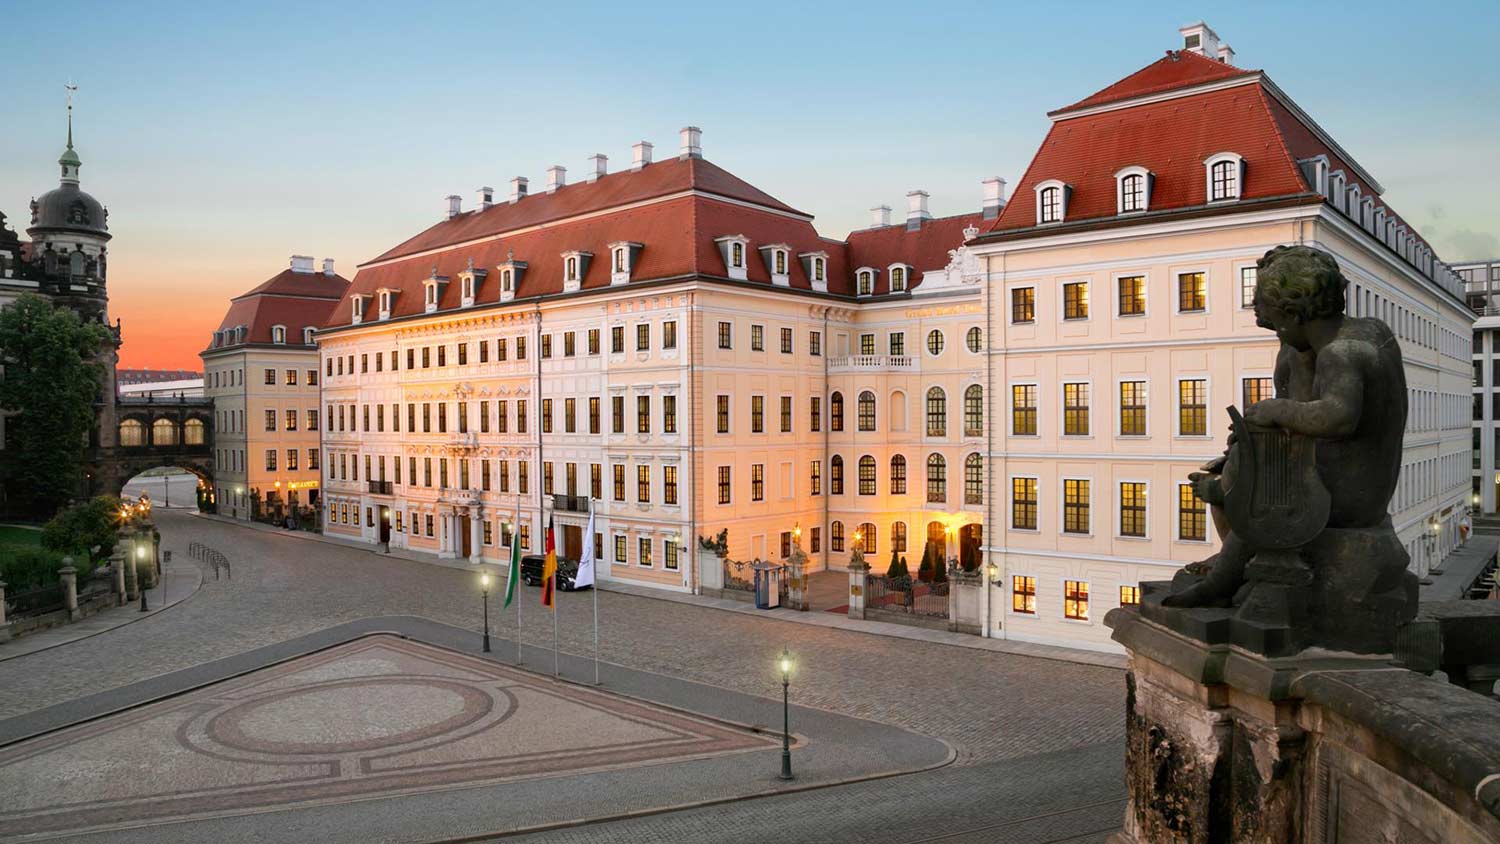 Hotel Taschenbergpalais Kempinski Dresden, Germany